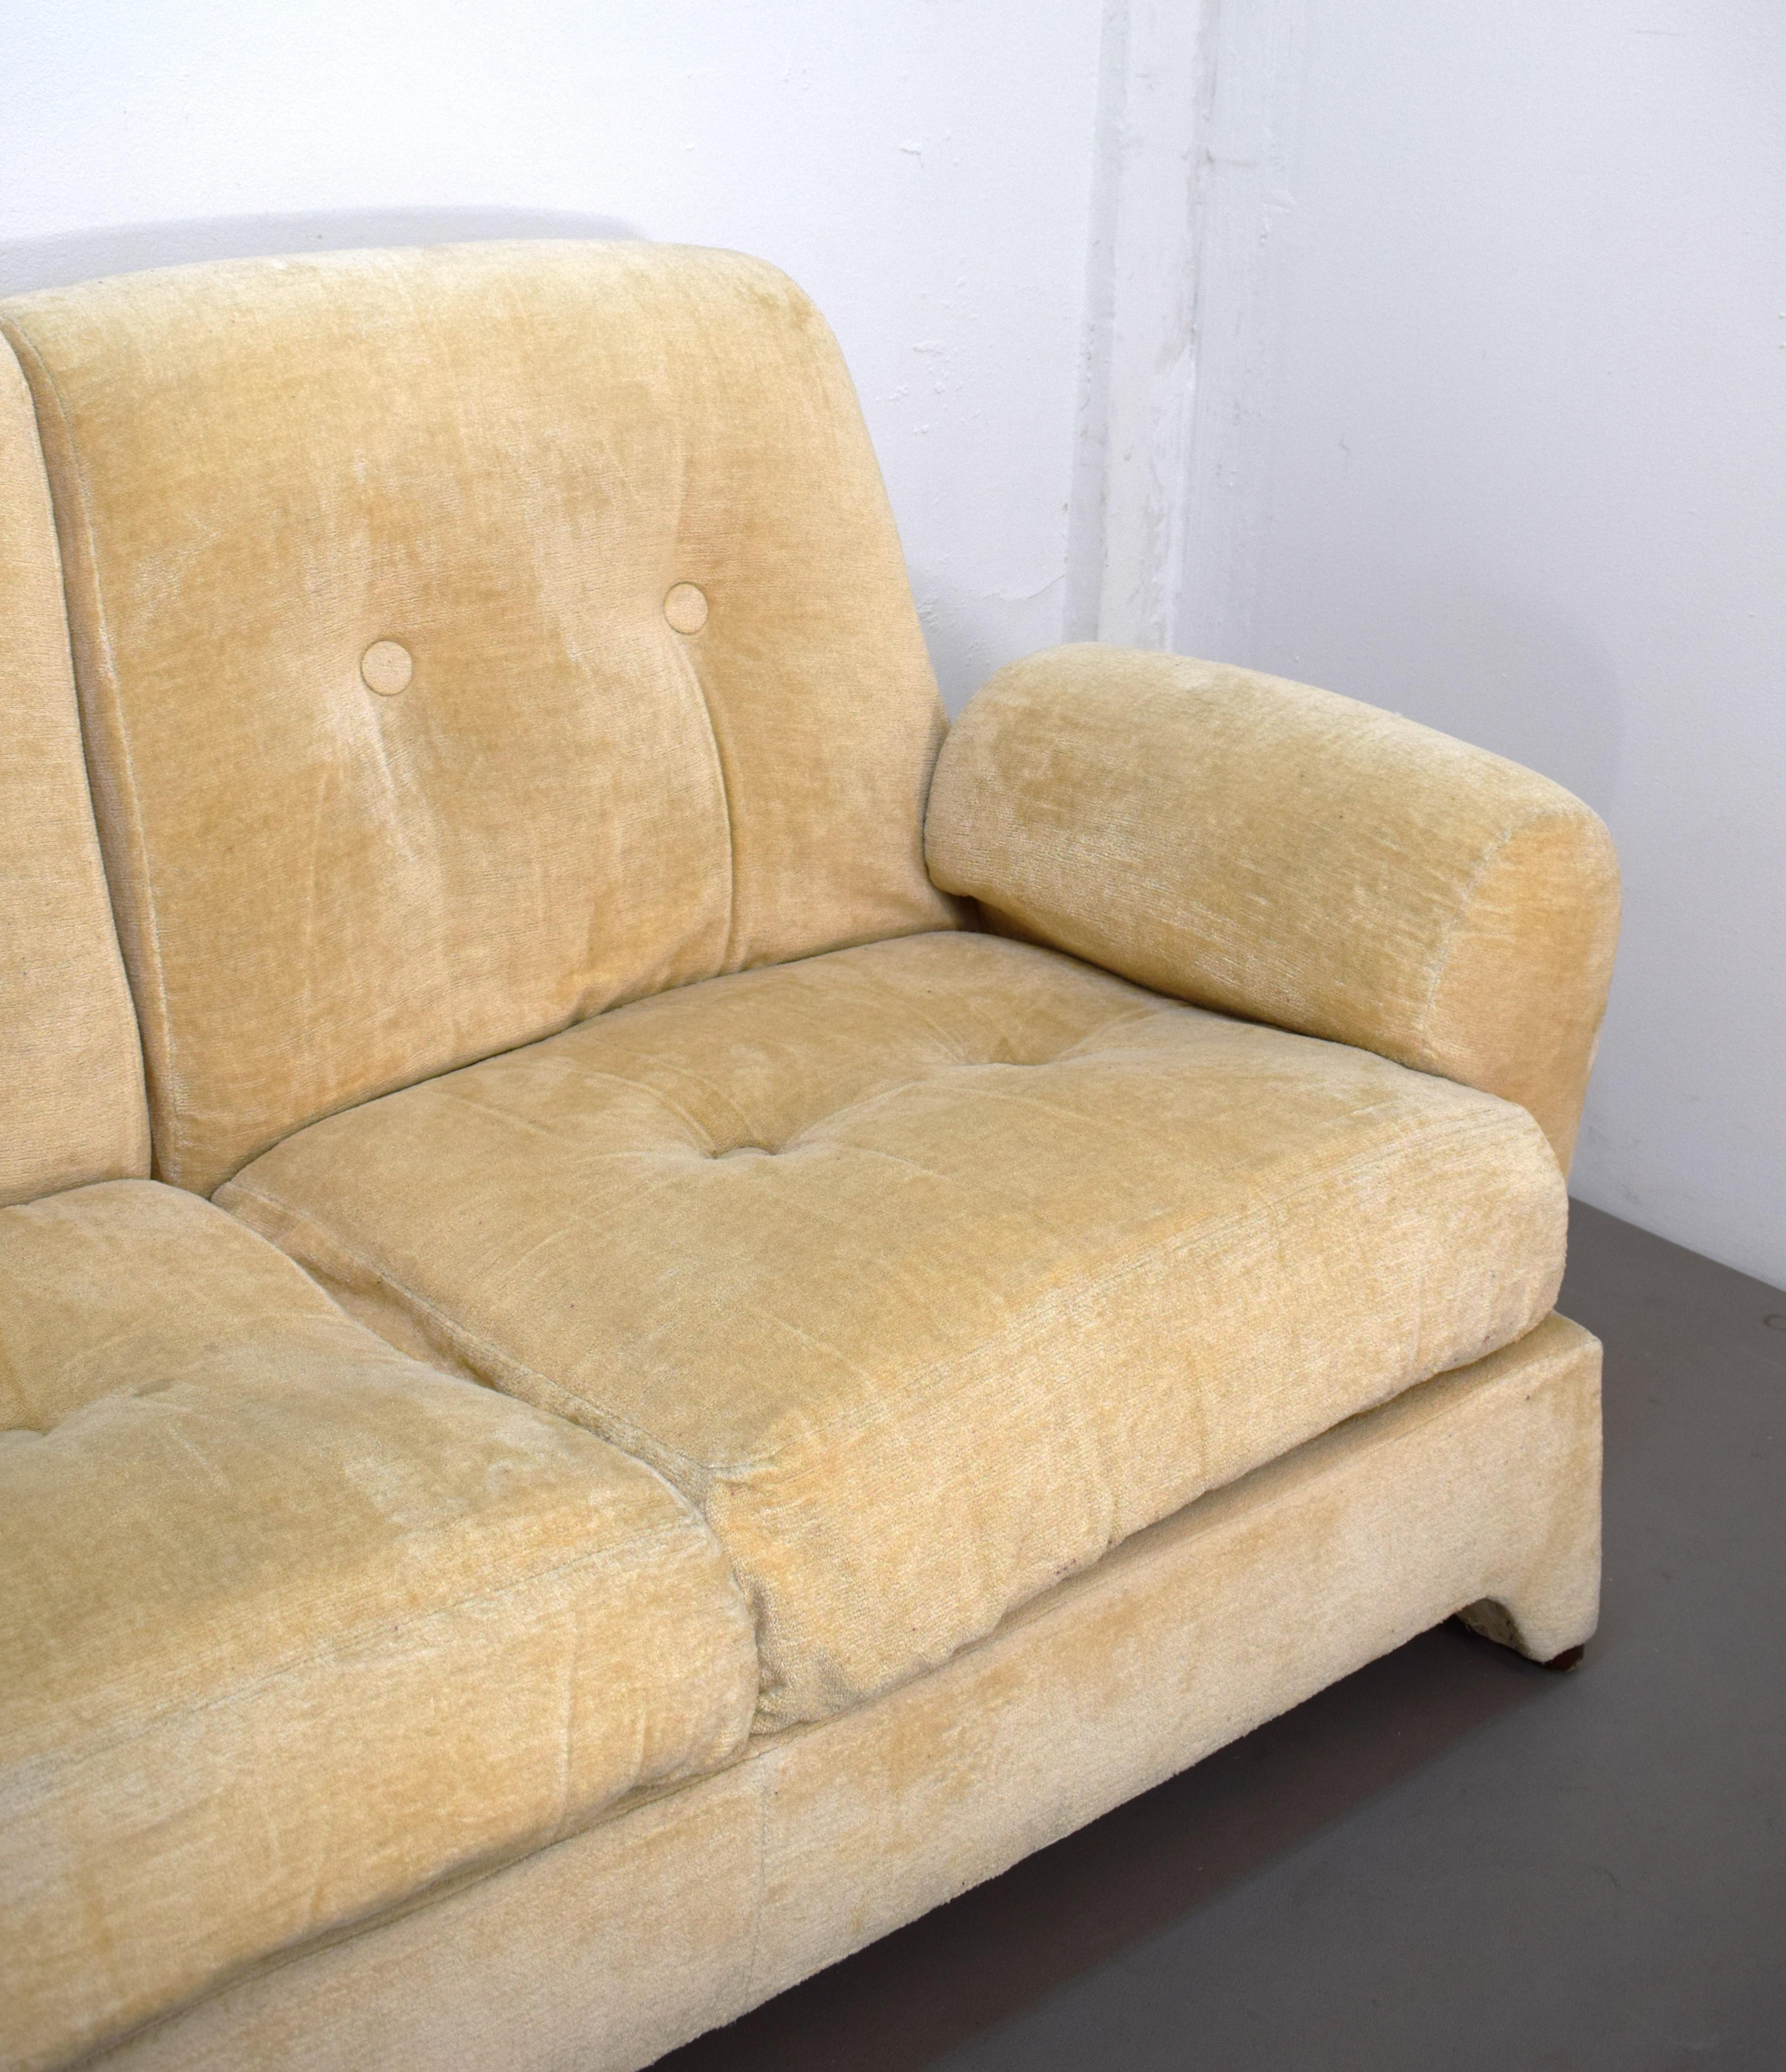 Italian vintage sofa by 1P, 1970s.

Dimensions: H= 80 cm; W= 207 cm; D= 85 cm; H seduta= 40 cm.